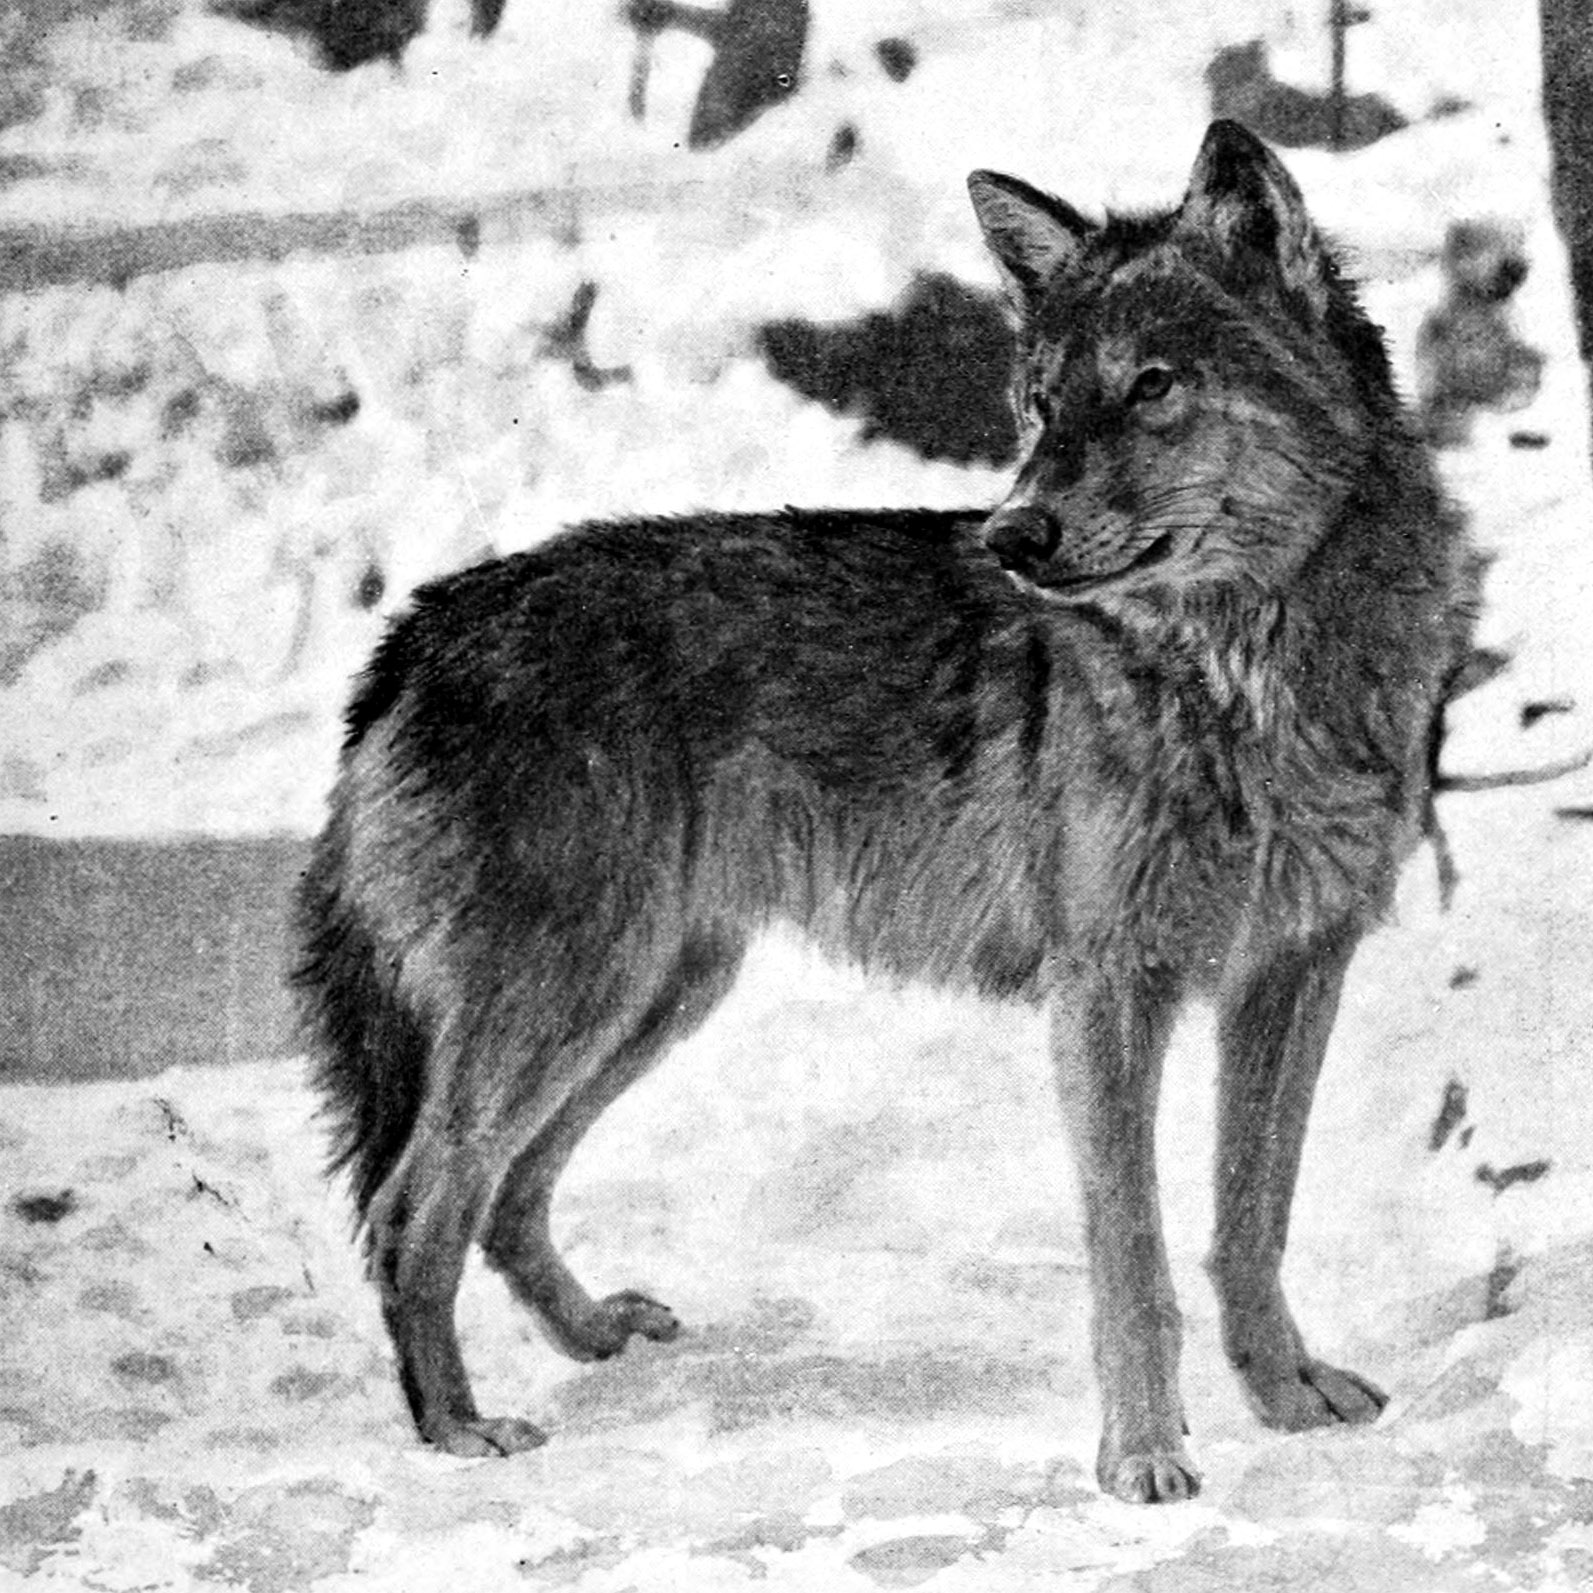 Wolf in winter